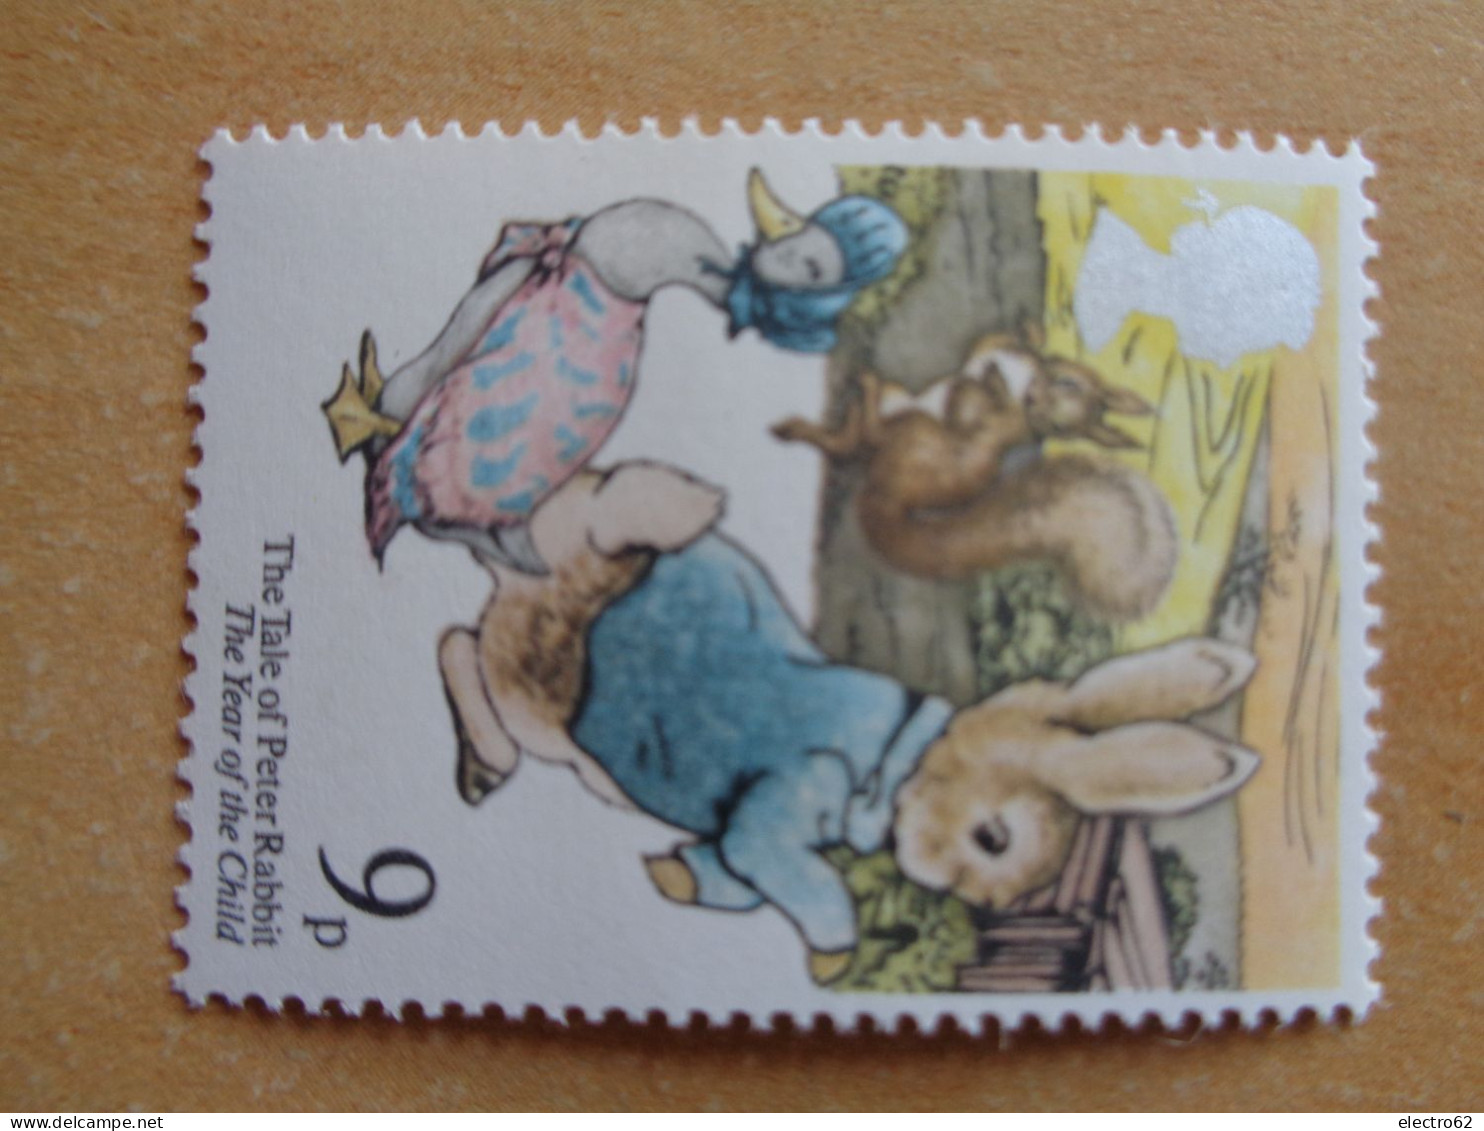 Grande Bretagne Great Britain Peter Rabbit Crapaud Toad Winnie Alice Child Children Bambino Kind Nino Neuf 1979 - Fairy Tales, Popular Stories & Legends